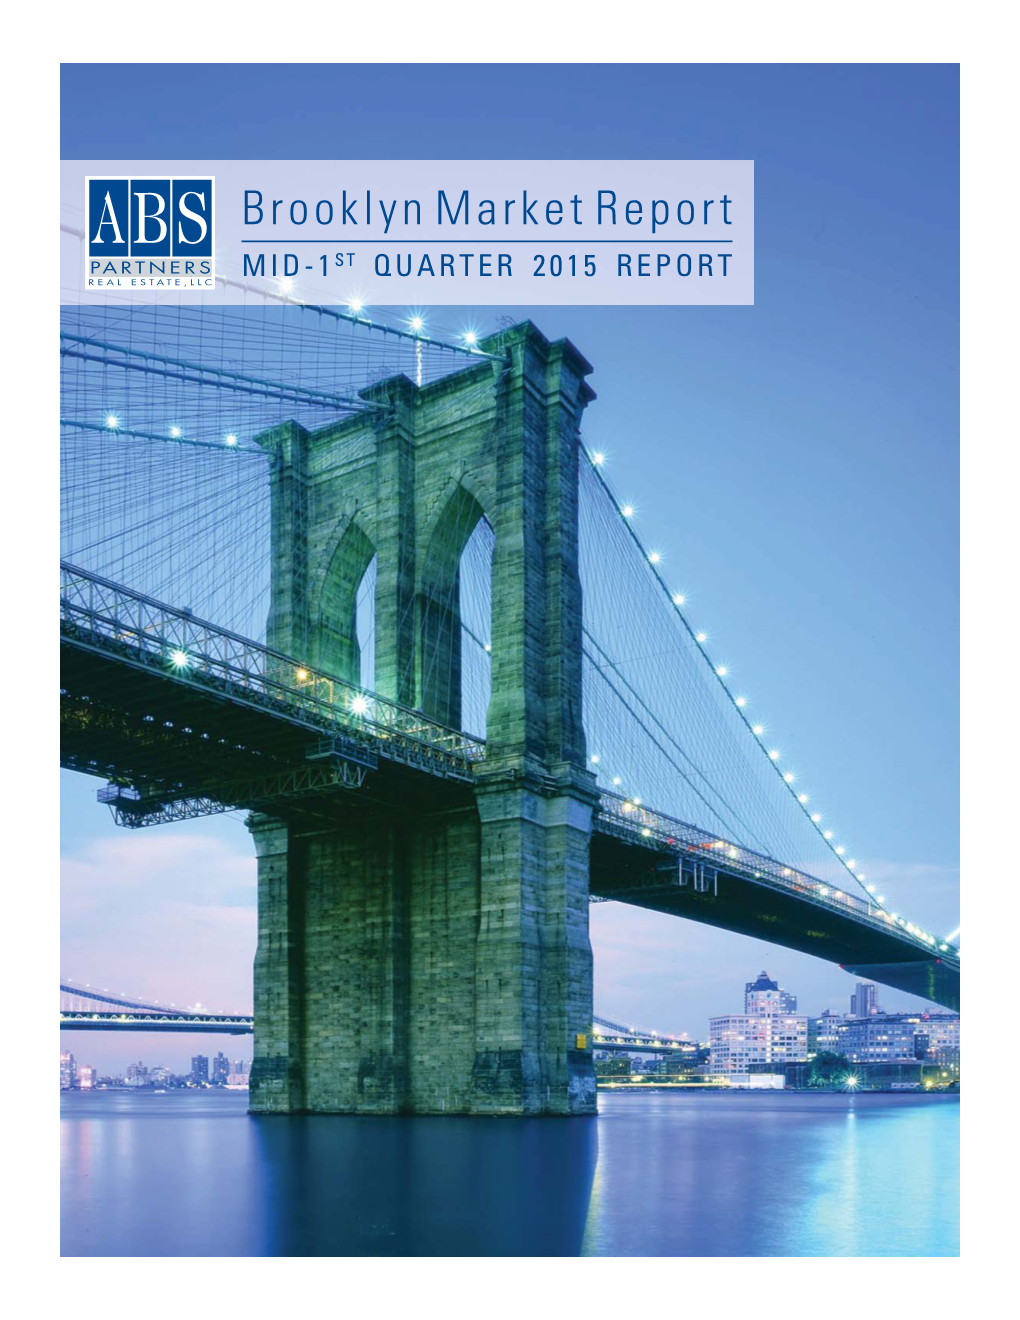 Brooklyn Market Report MID-1ST QUARTER 2015 REPORT Building 77 - Renderings Looking Ahead